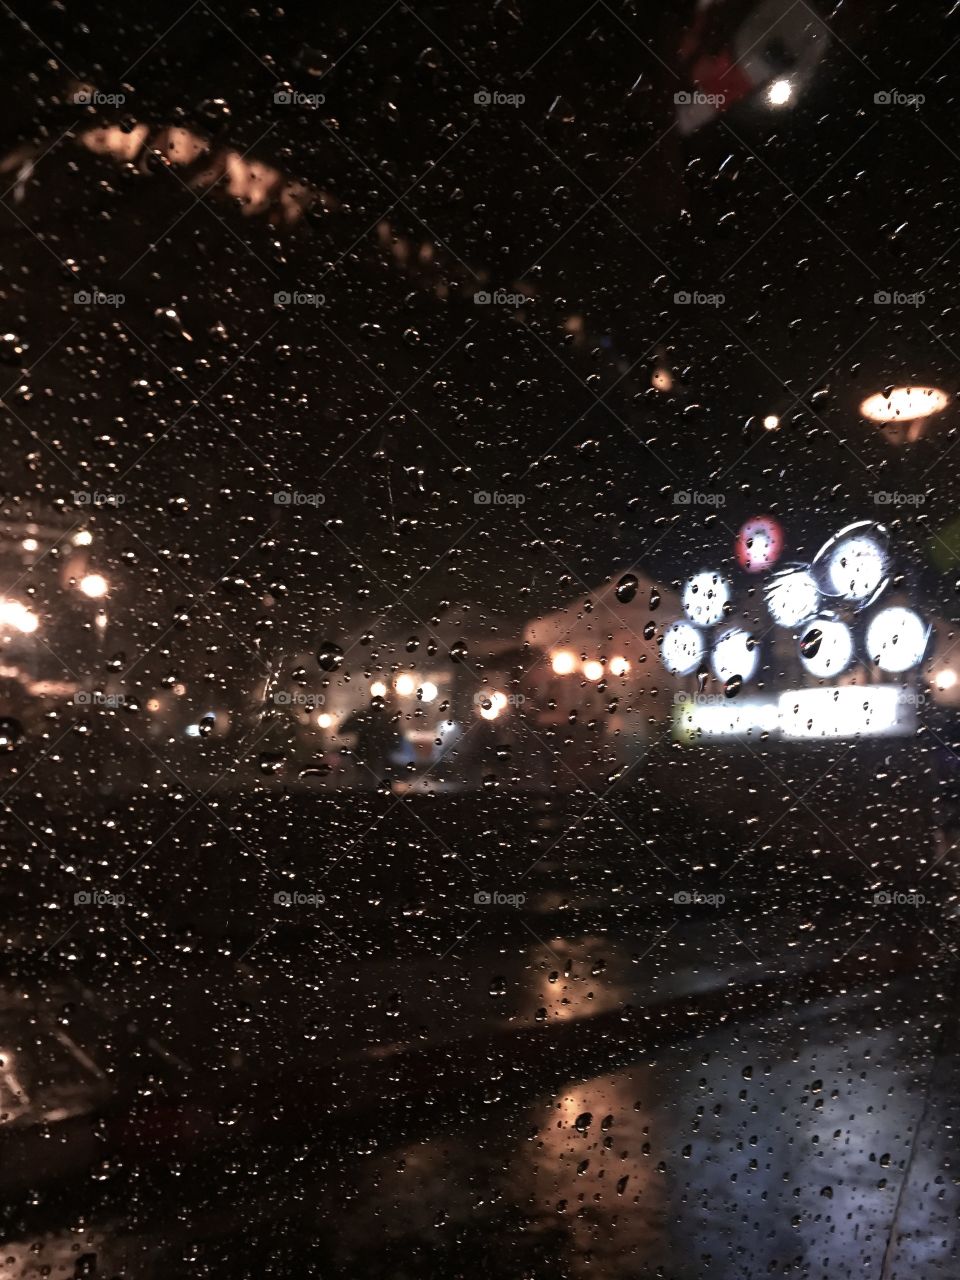 Watching the rain through the window. The night lights blur through the water.